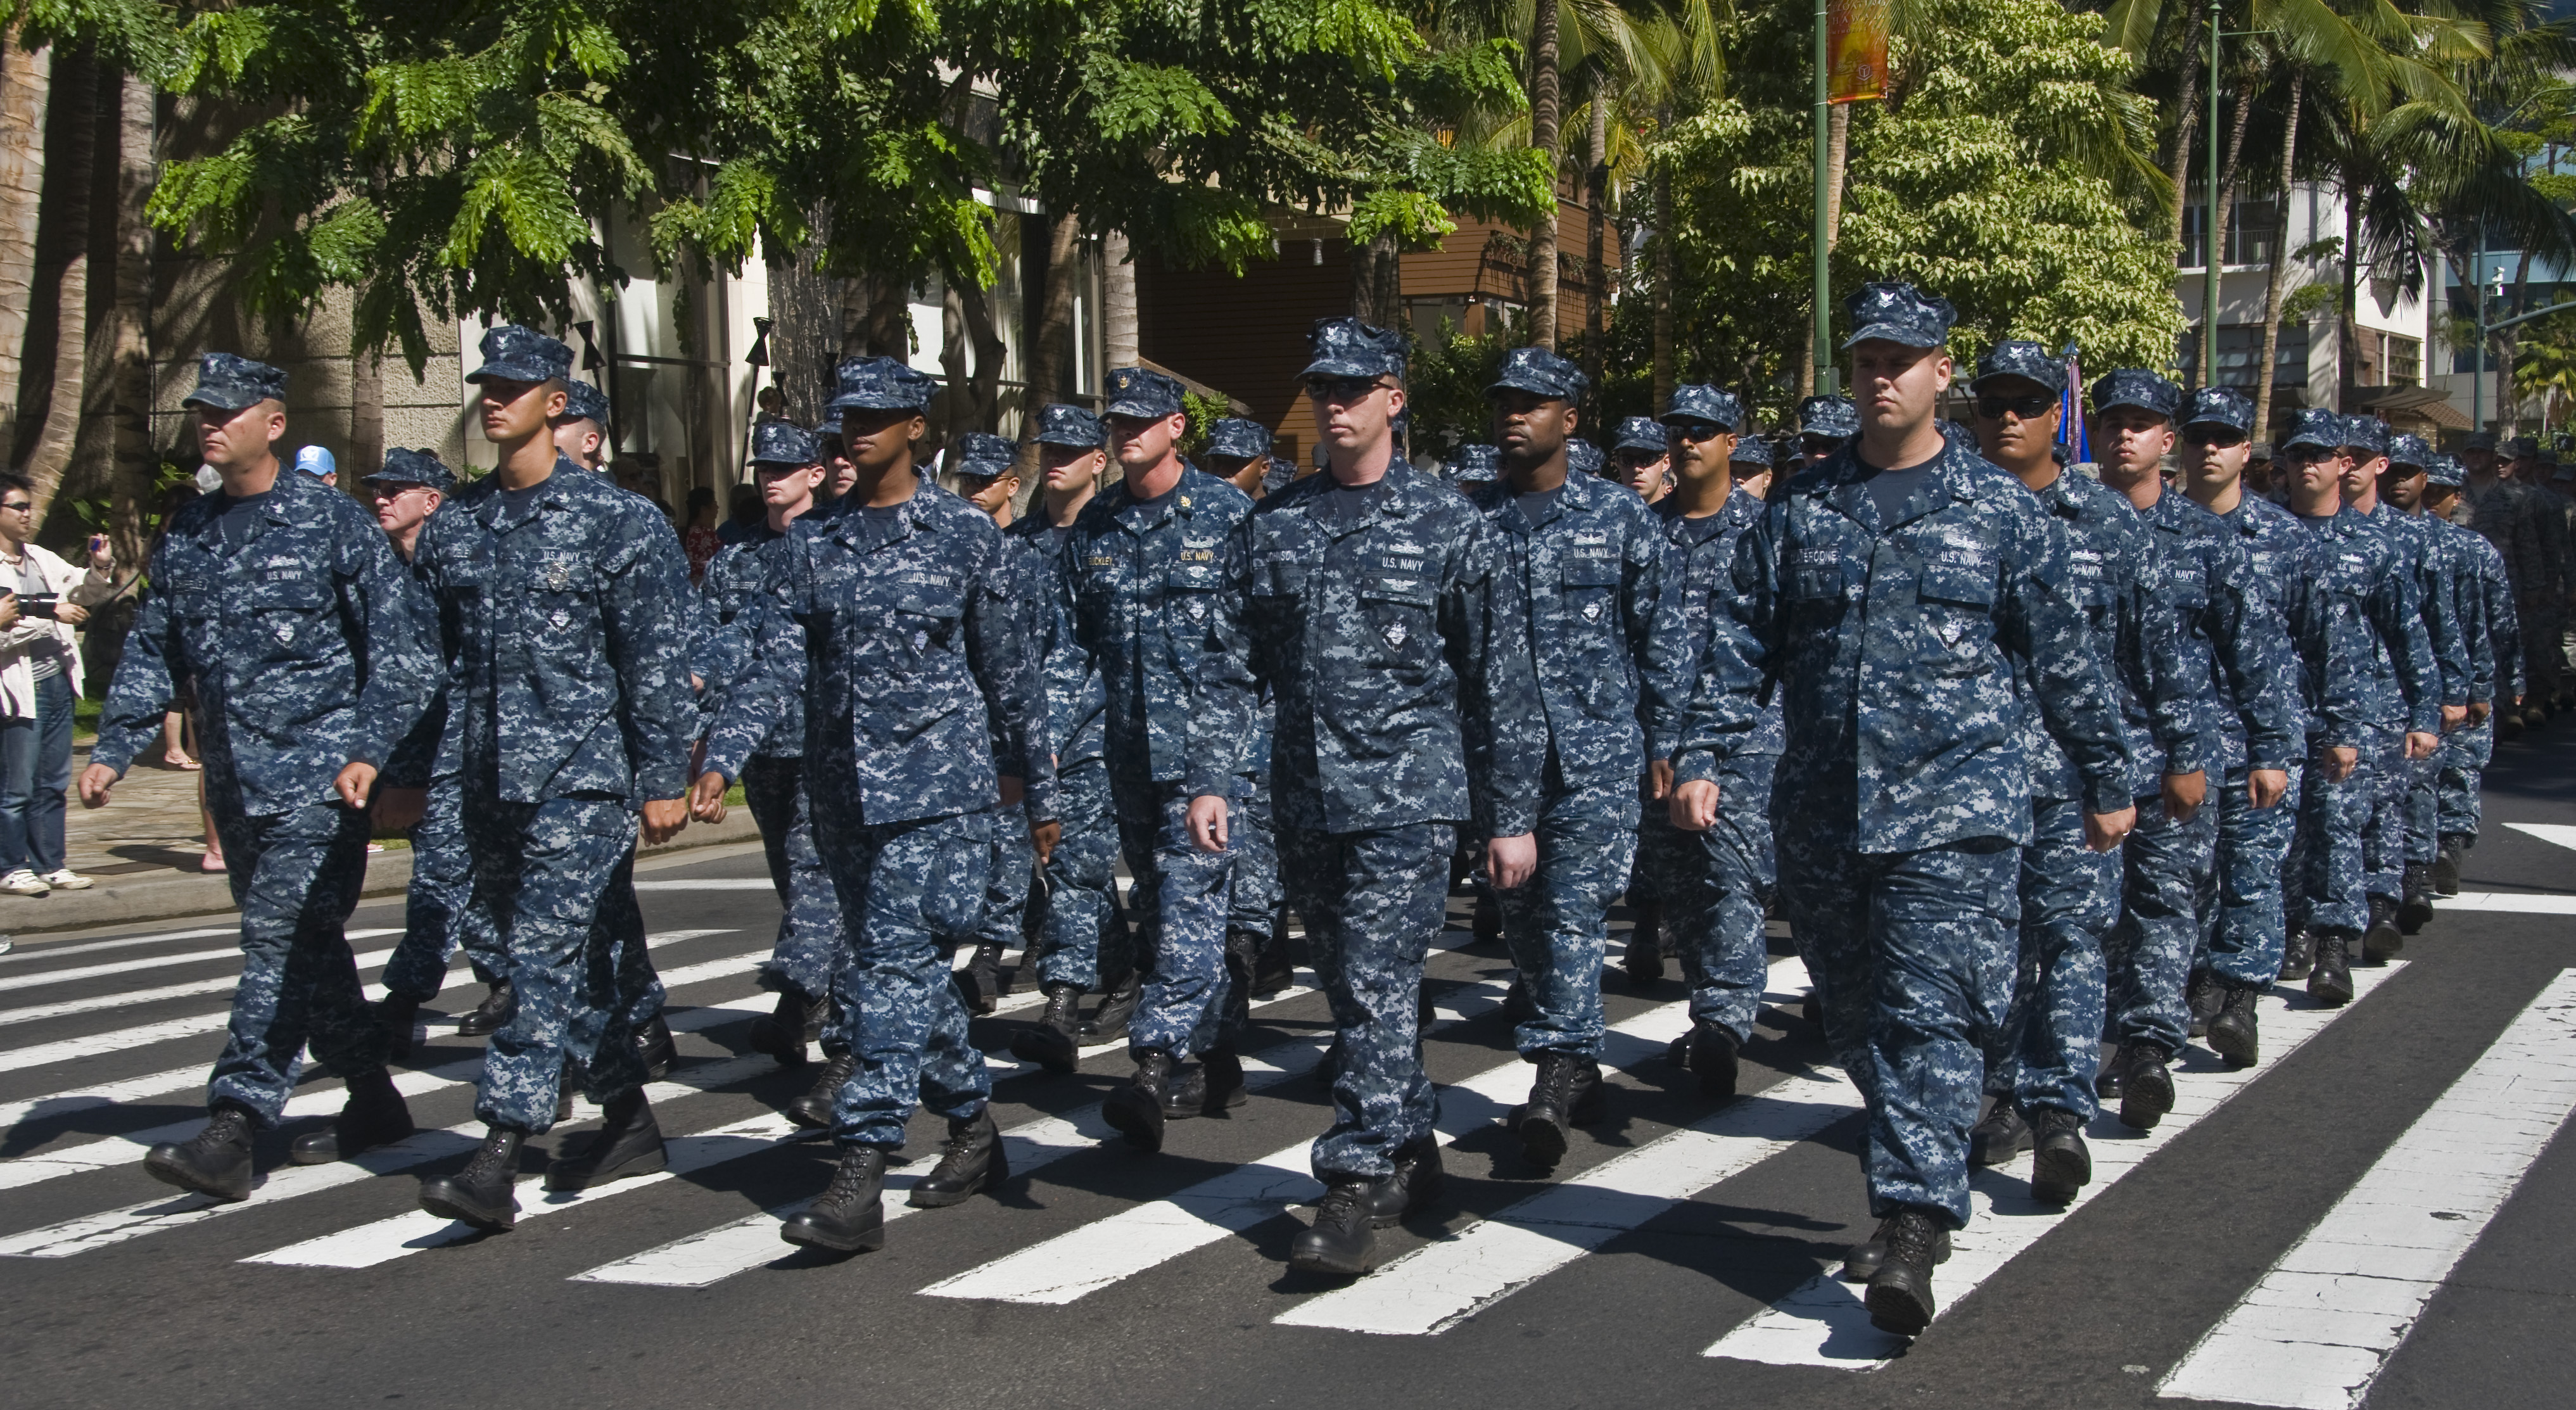 Military sailors photo